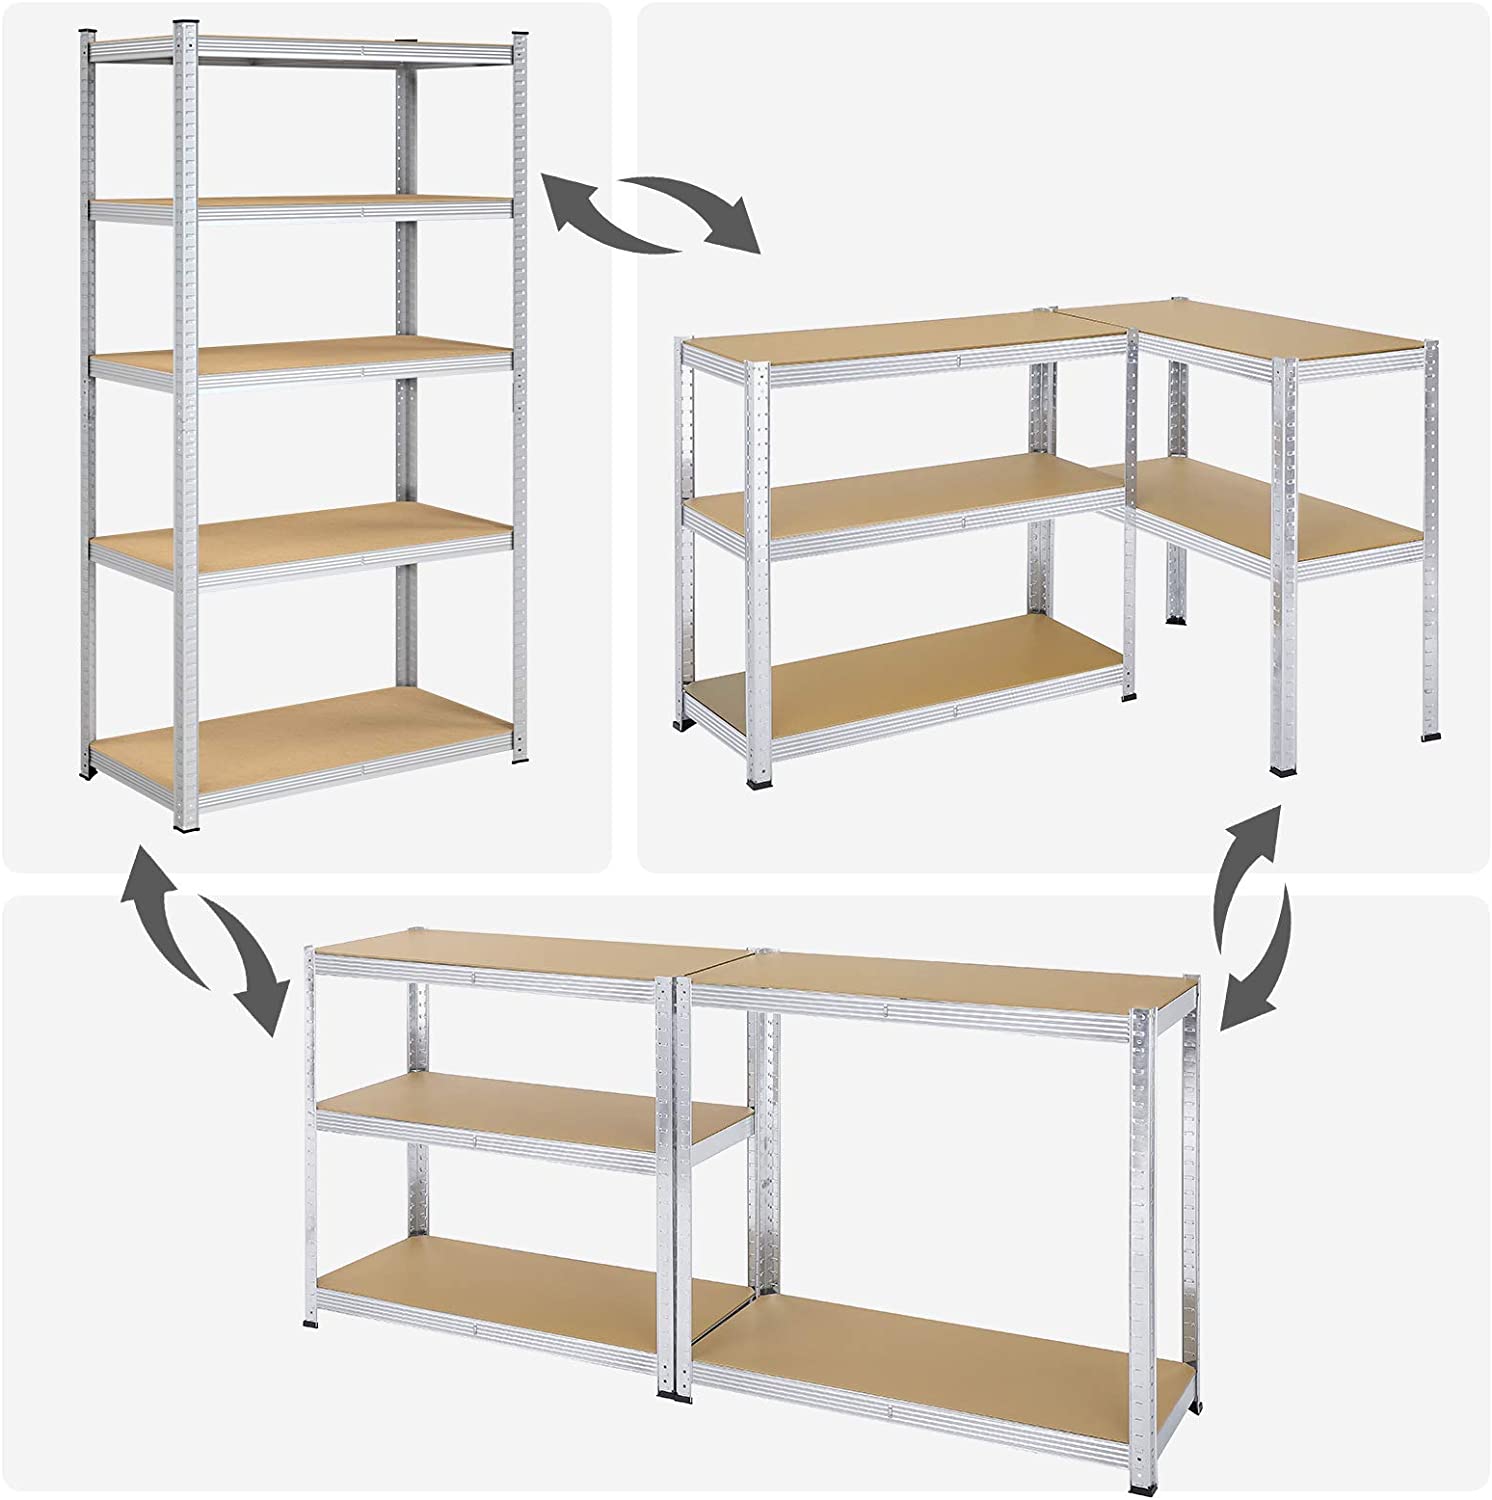 Nancy's Chippawa Storage Rack - Shelving Rack - 5 Adjustable Shelves - Metal - Basement Rack - White - 200 x 100 x 50 cm